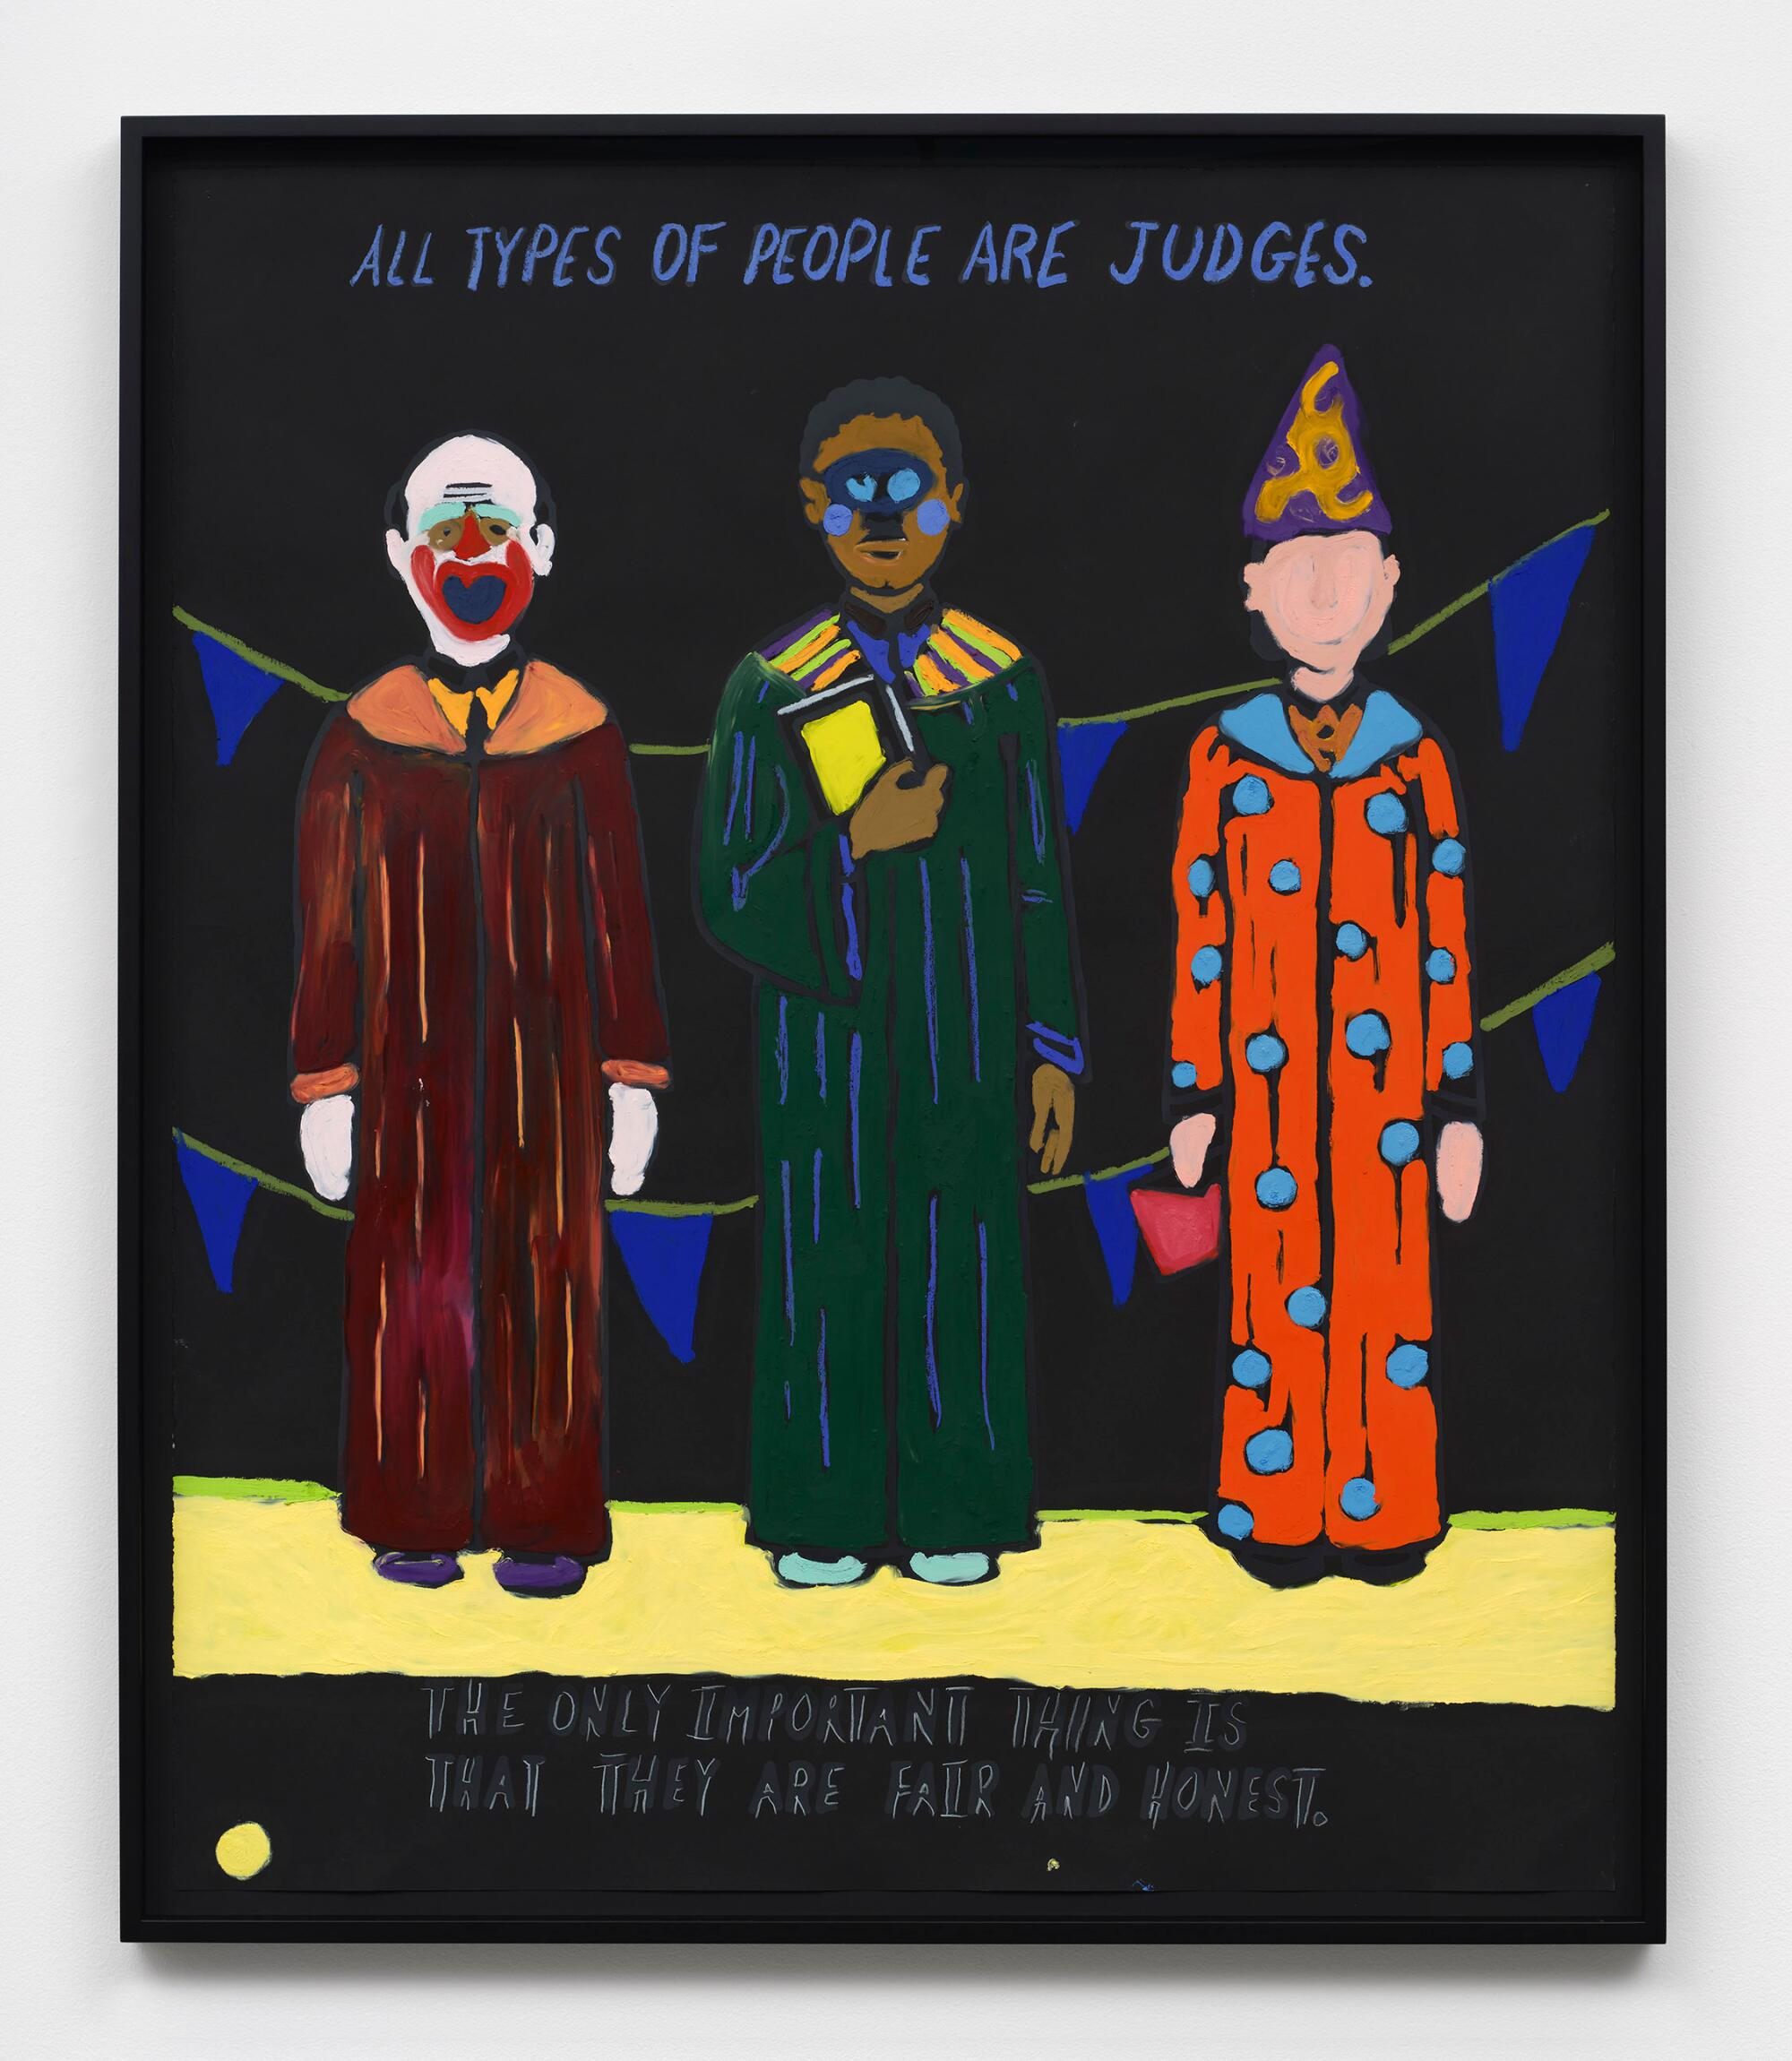 Three cartoonish figures in robes on a dark background in an artwork